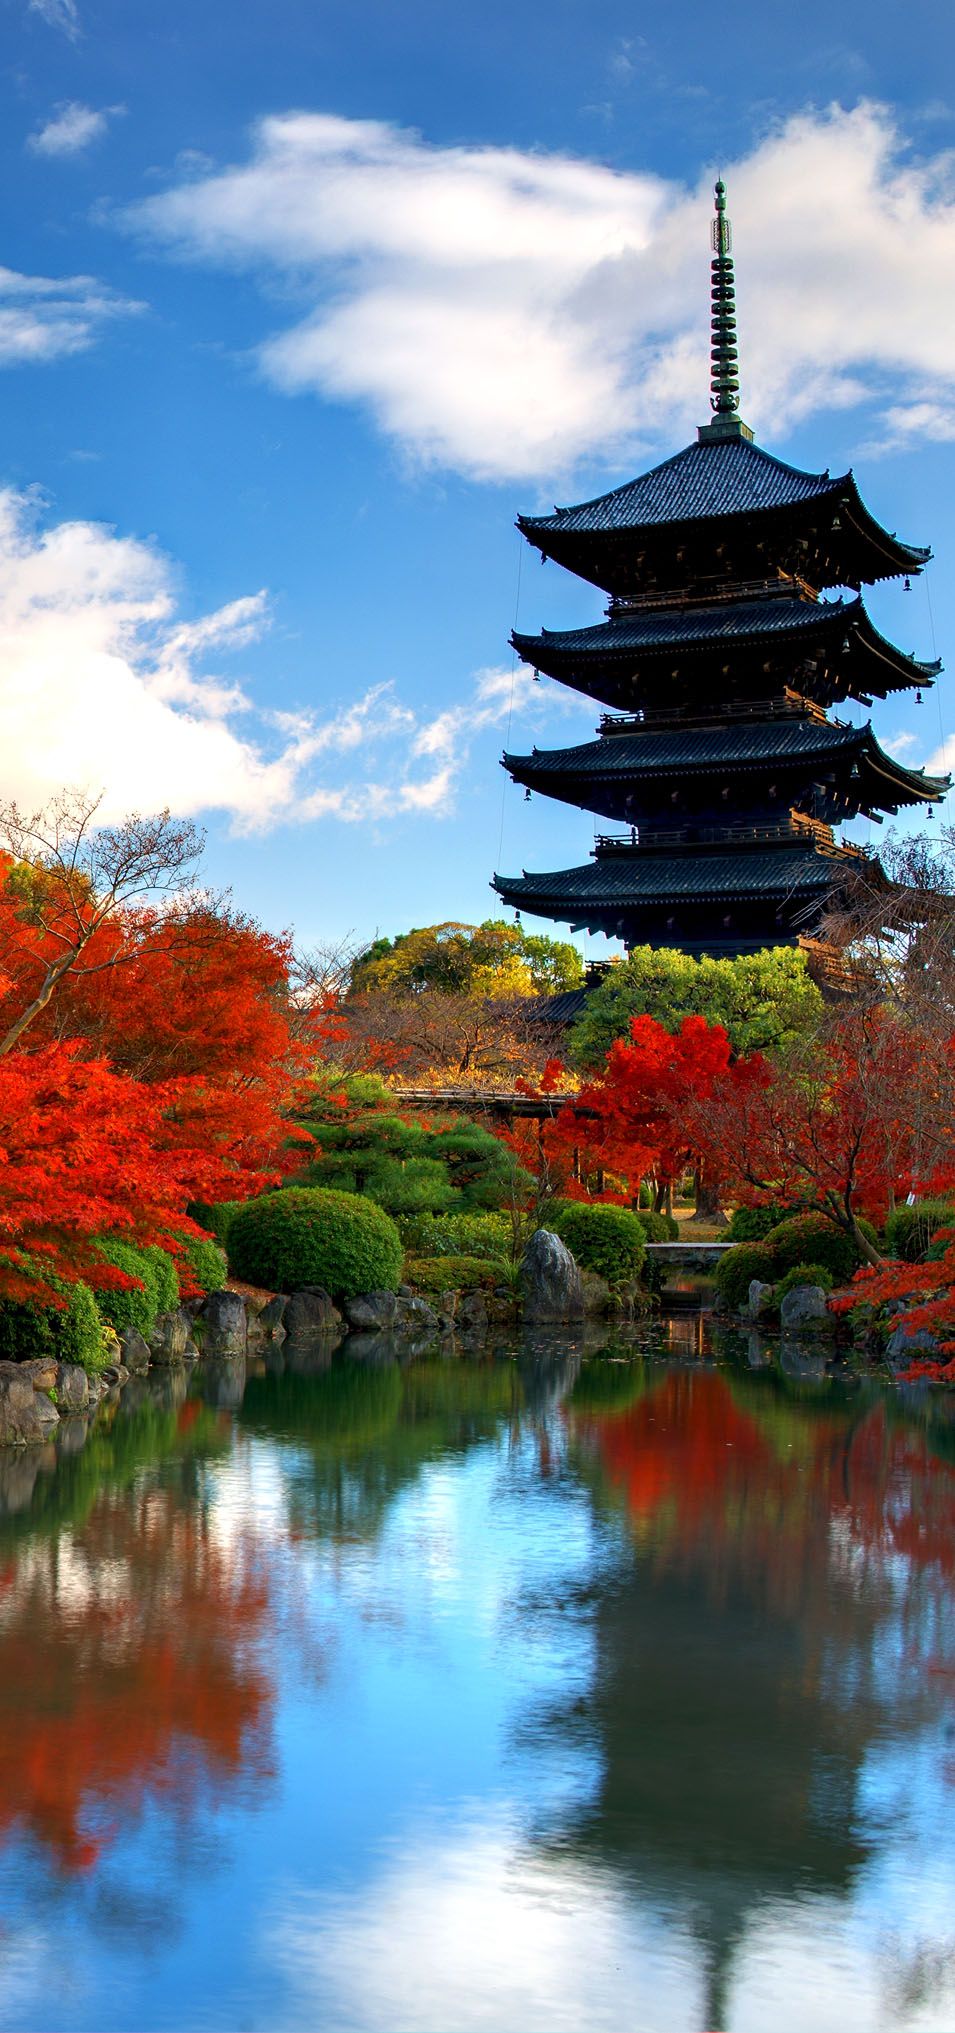 19 Reasons To Love Japanan An Unforgettable Travel Destination Page 11 美しい風景 京都おすすめ観光スポット 旅行参考イメージまとめ